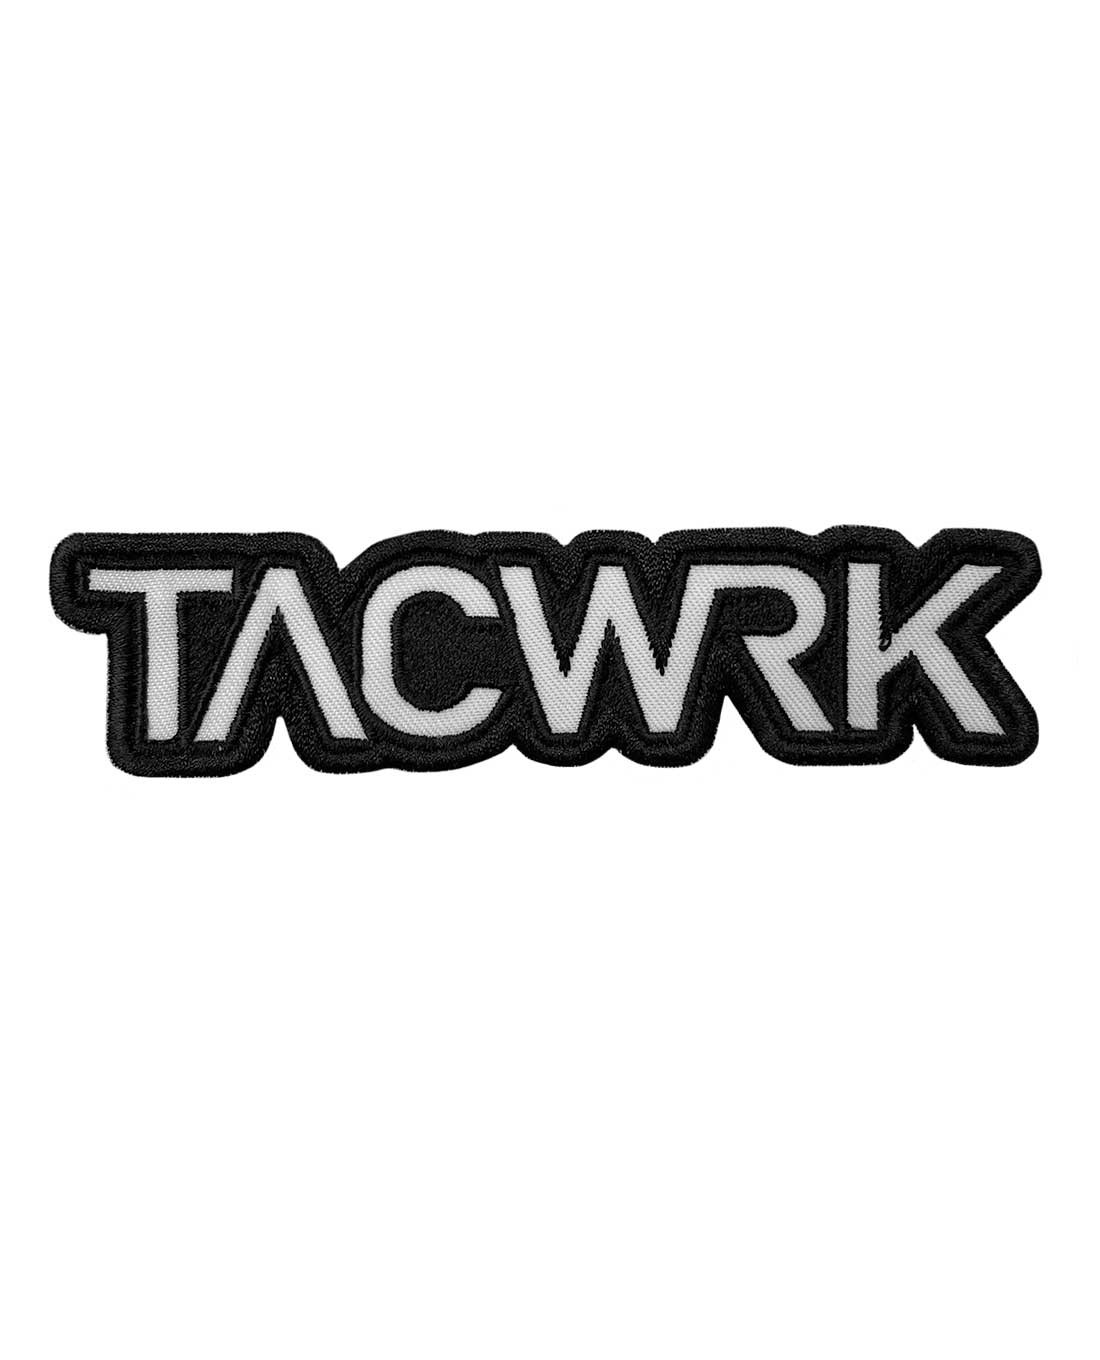 TACWRK Major League Berlin Bär Rubber Patch